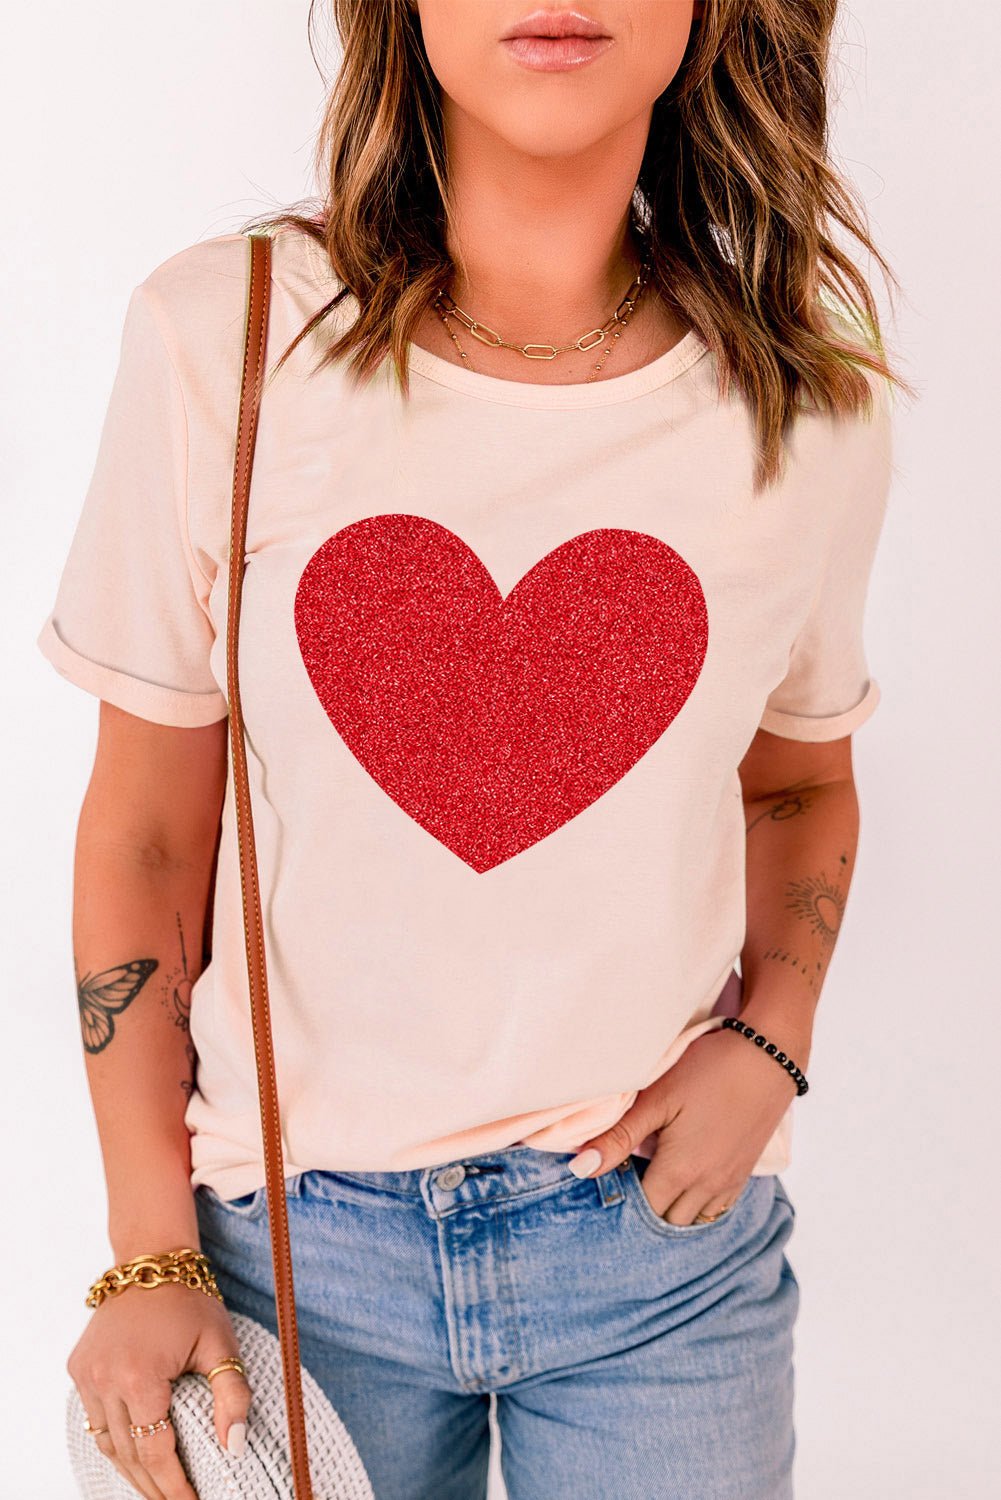 Glitter Heart Graphic T-Shirt - Fashion Girl Online Store